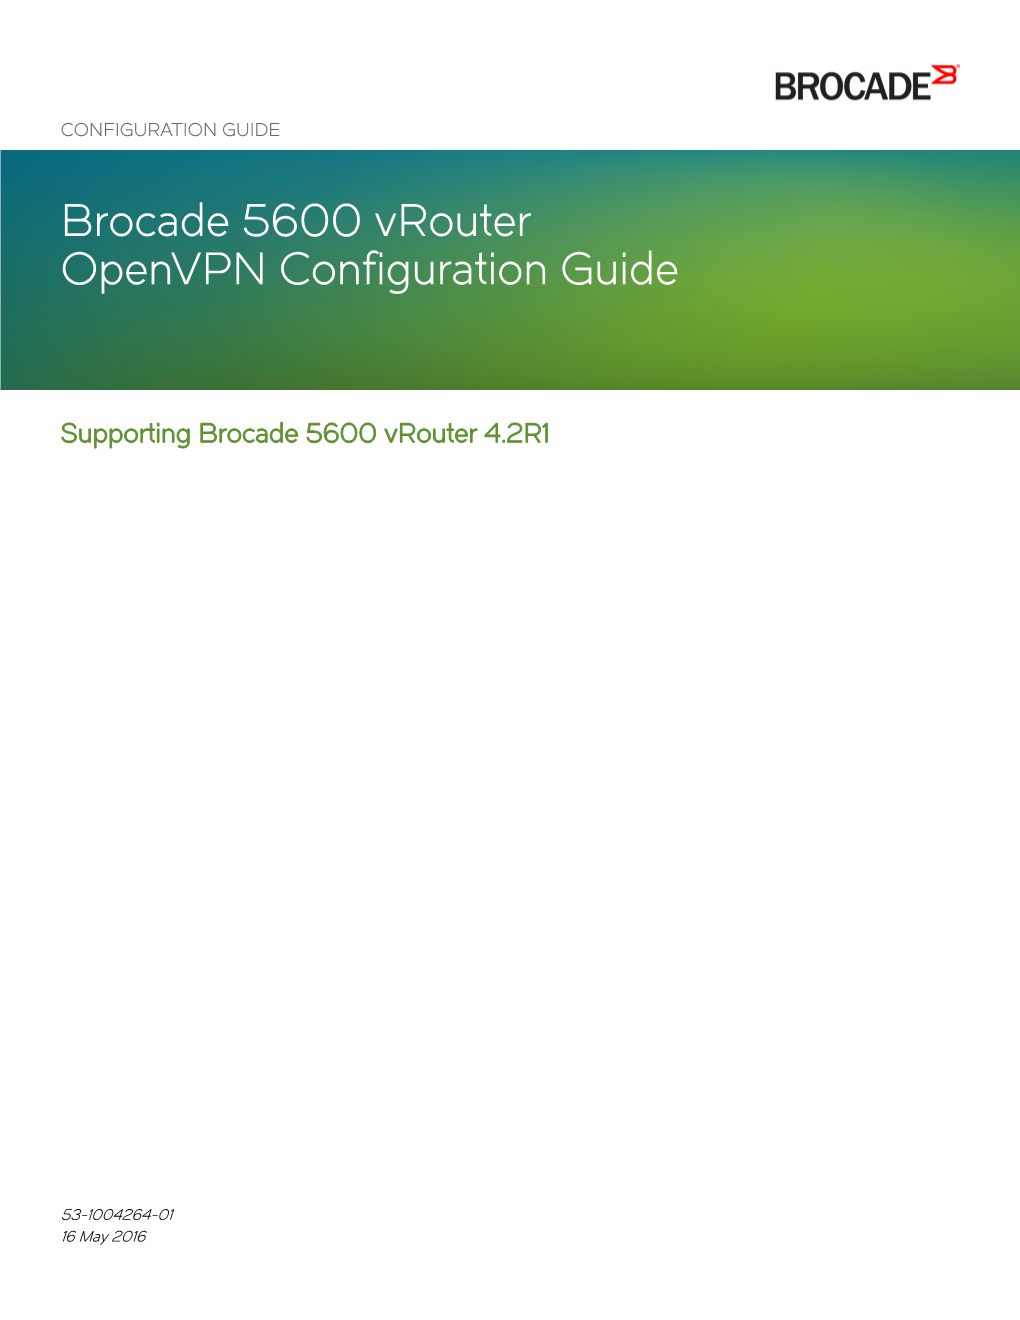 Brocade 5600 Vrouter Openvpn Configuration Guide, V4.2R1